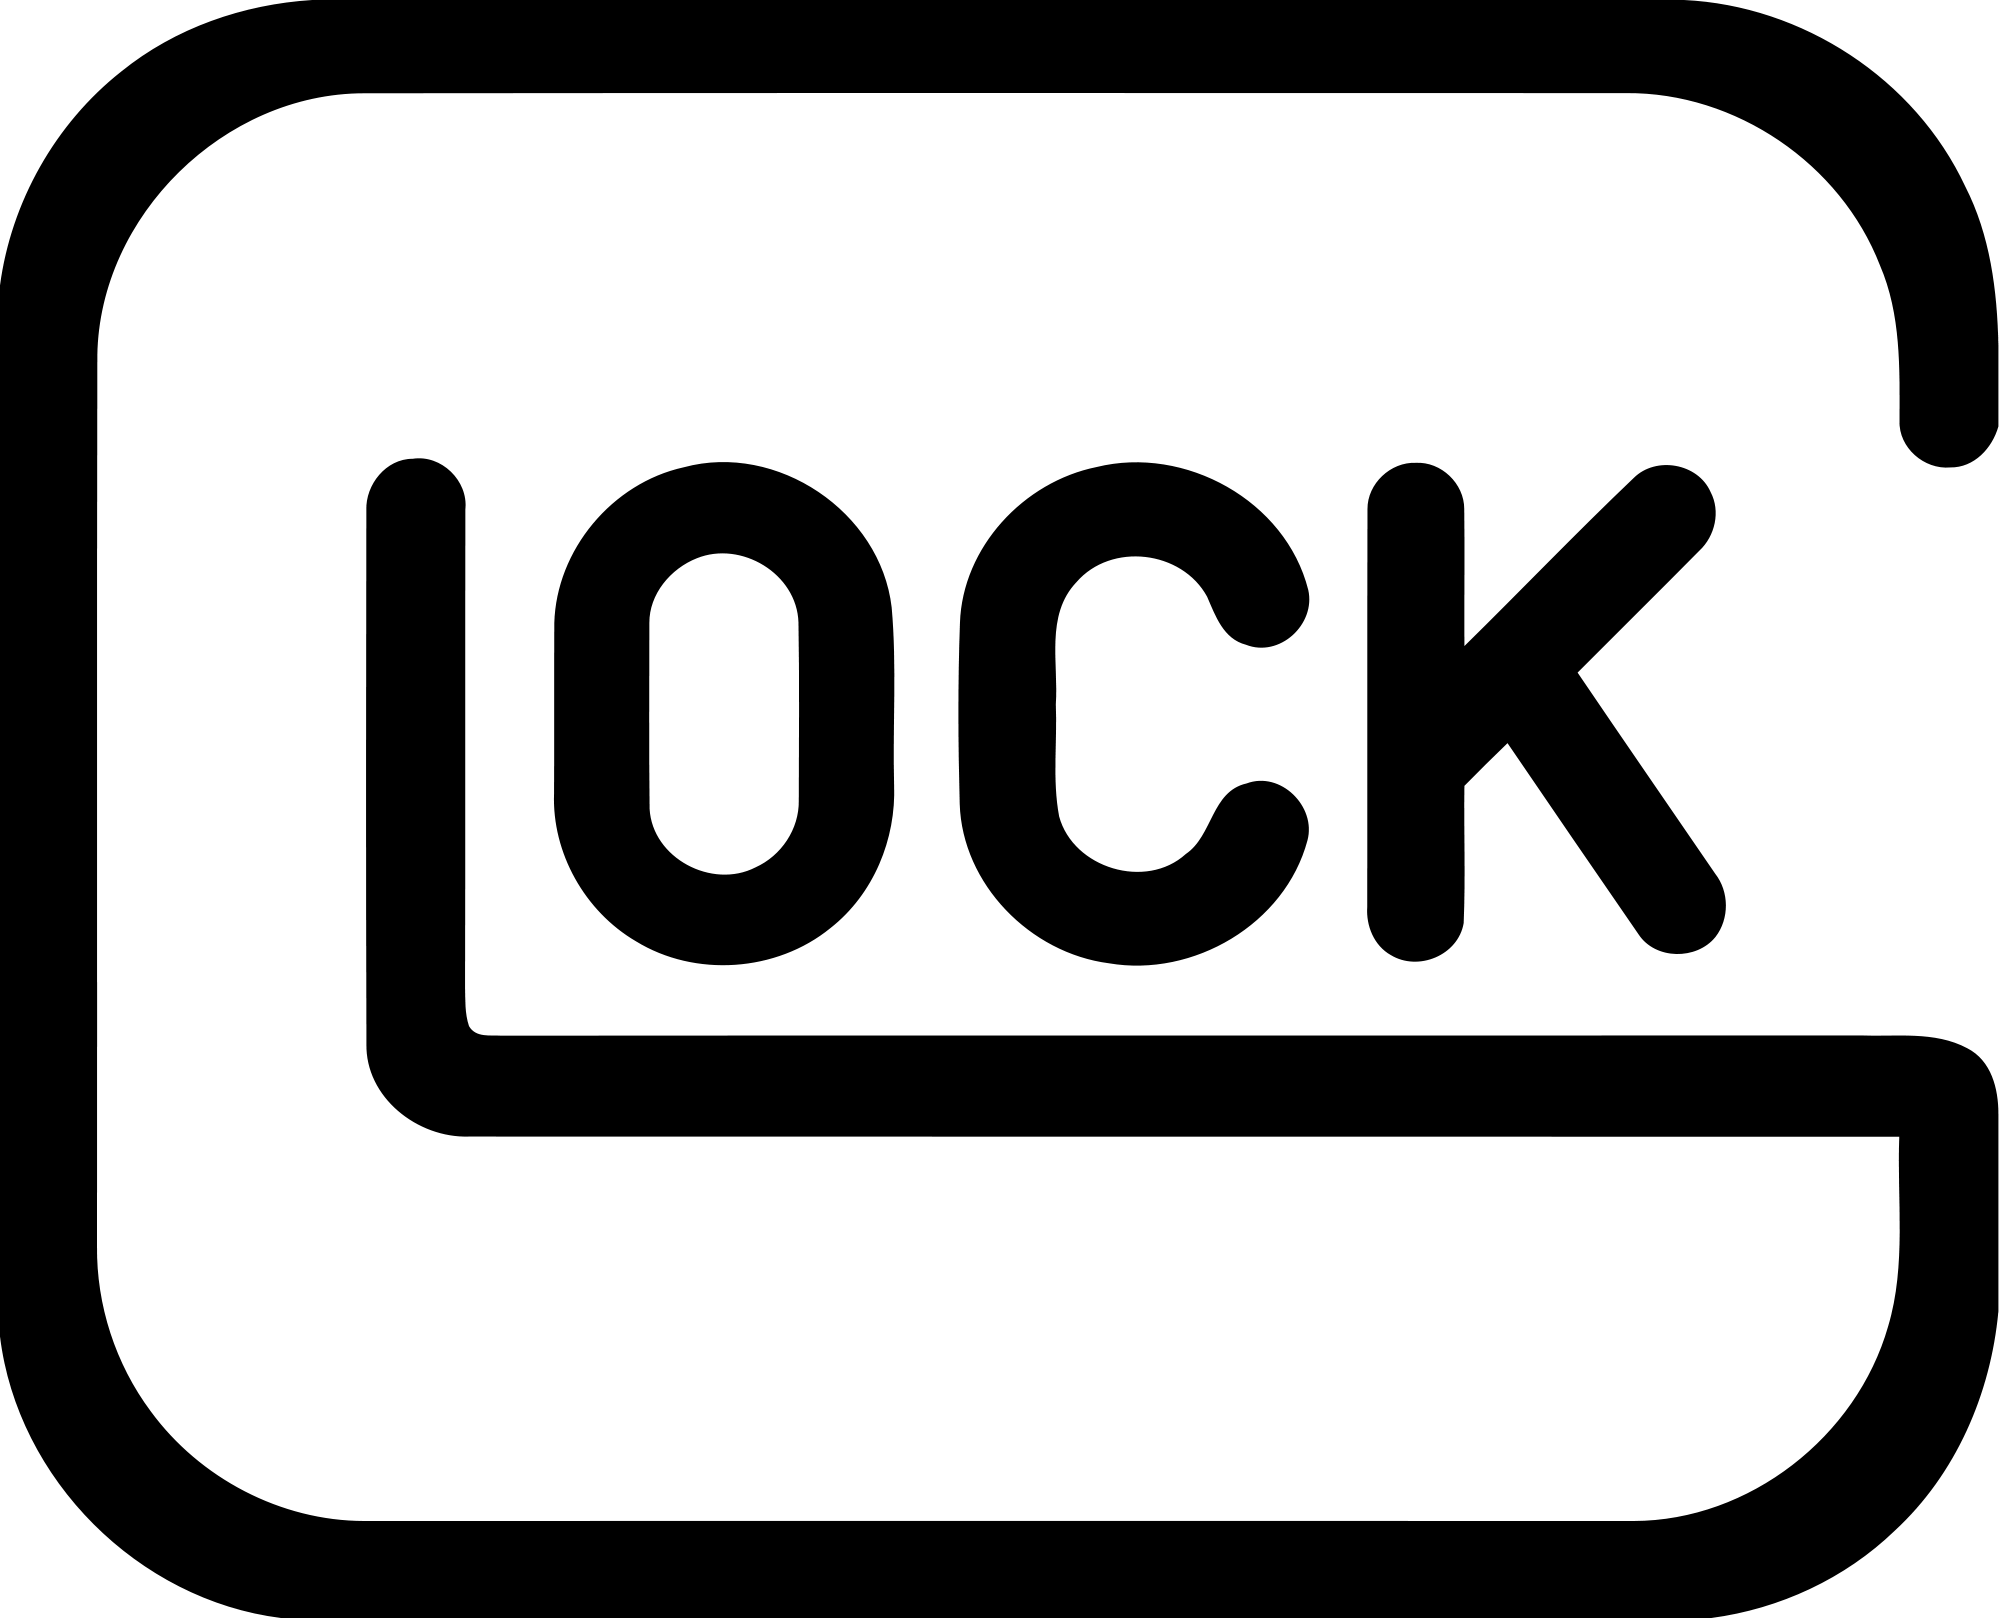 Glock Logo - File:Glock logo.svg - Wikimedia Commons